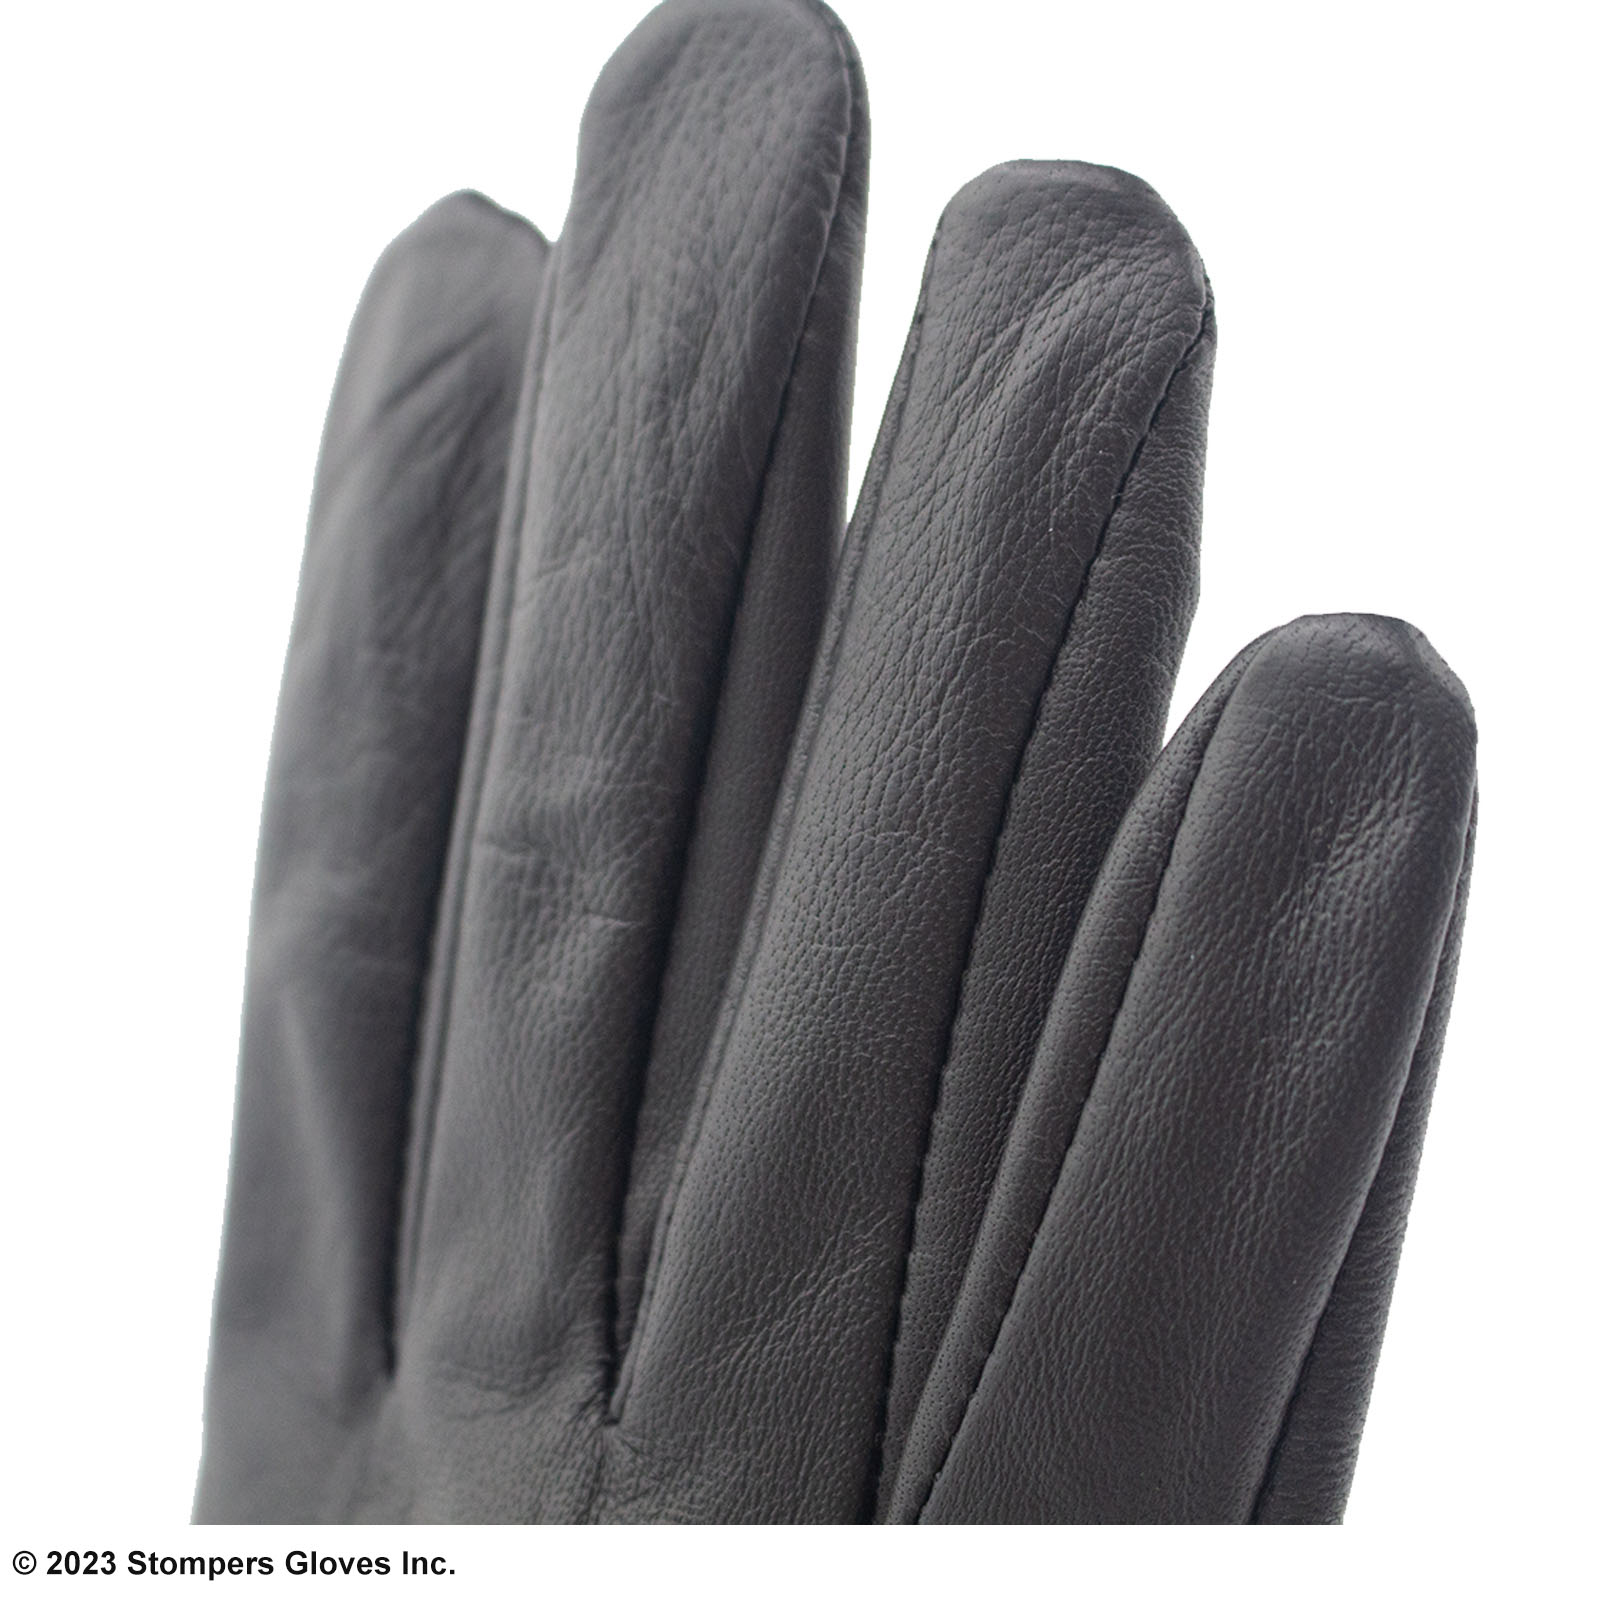 Patrol-X 2.0 Gloves by TOUGH GLOVES